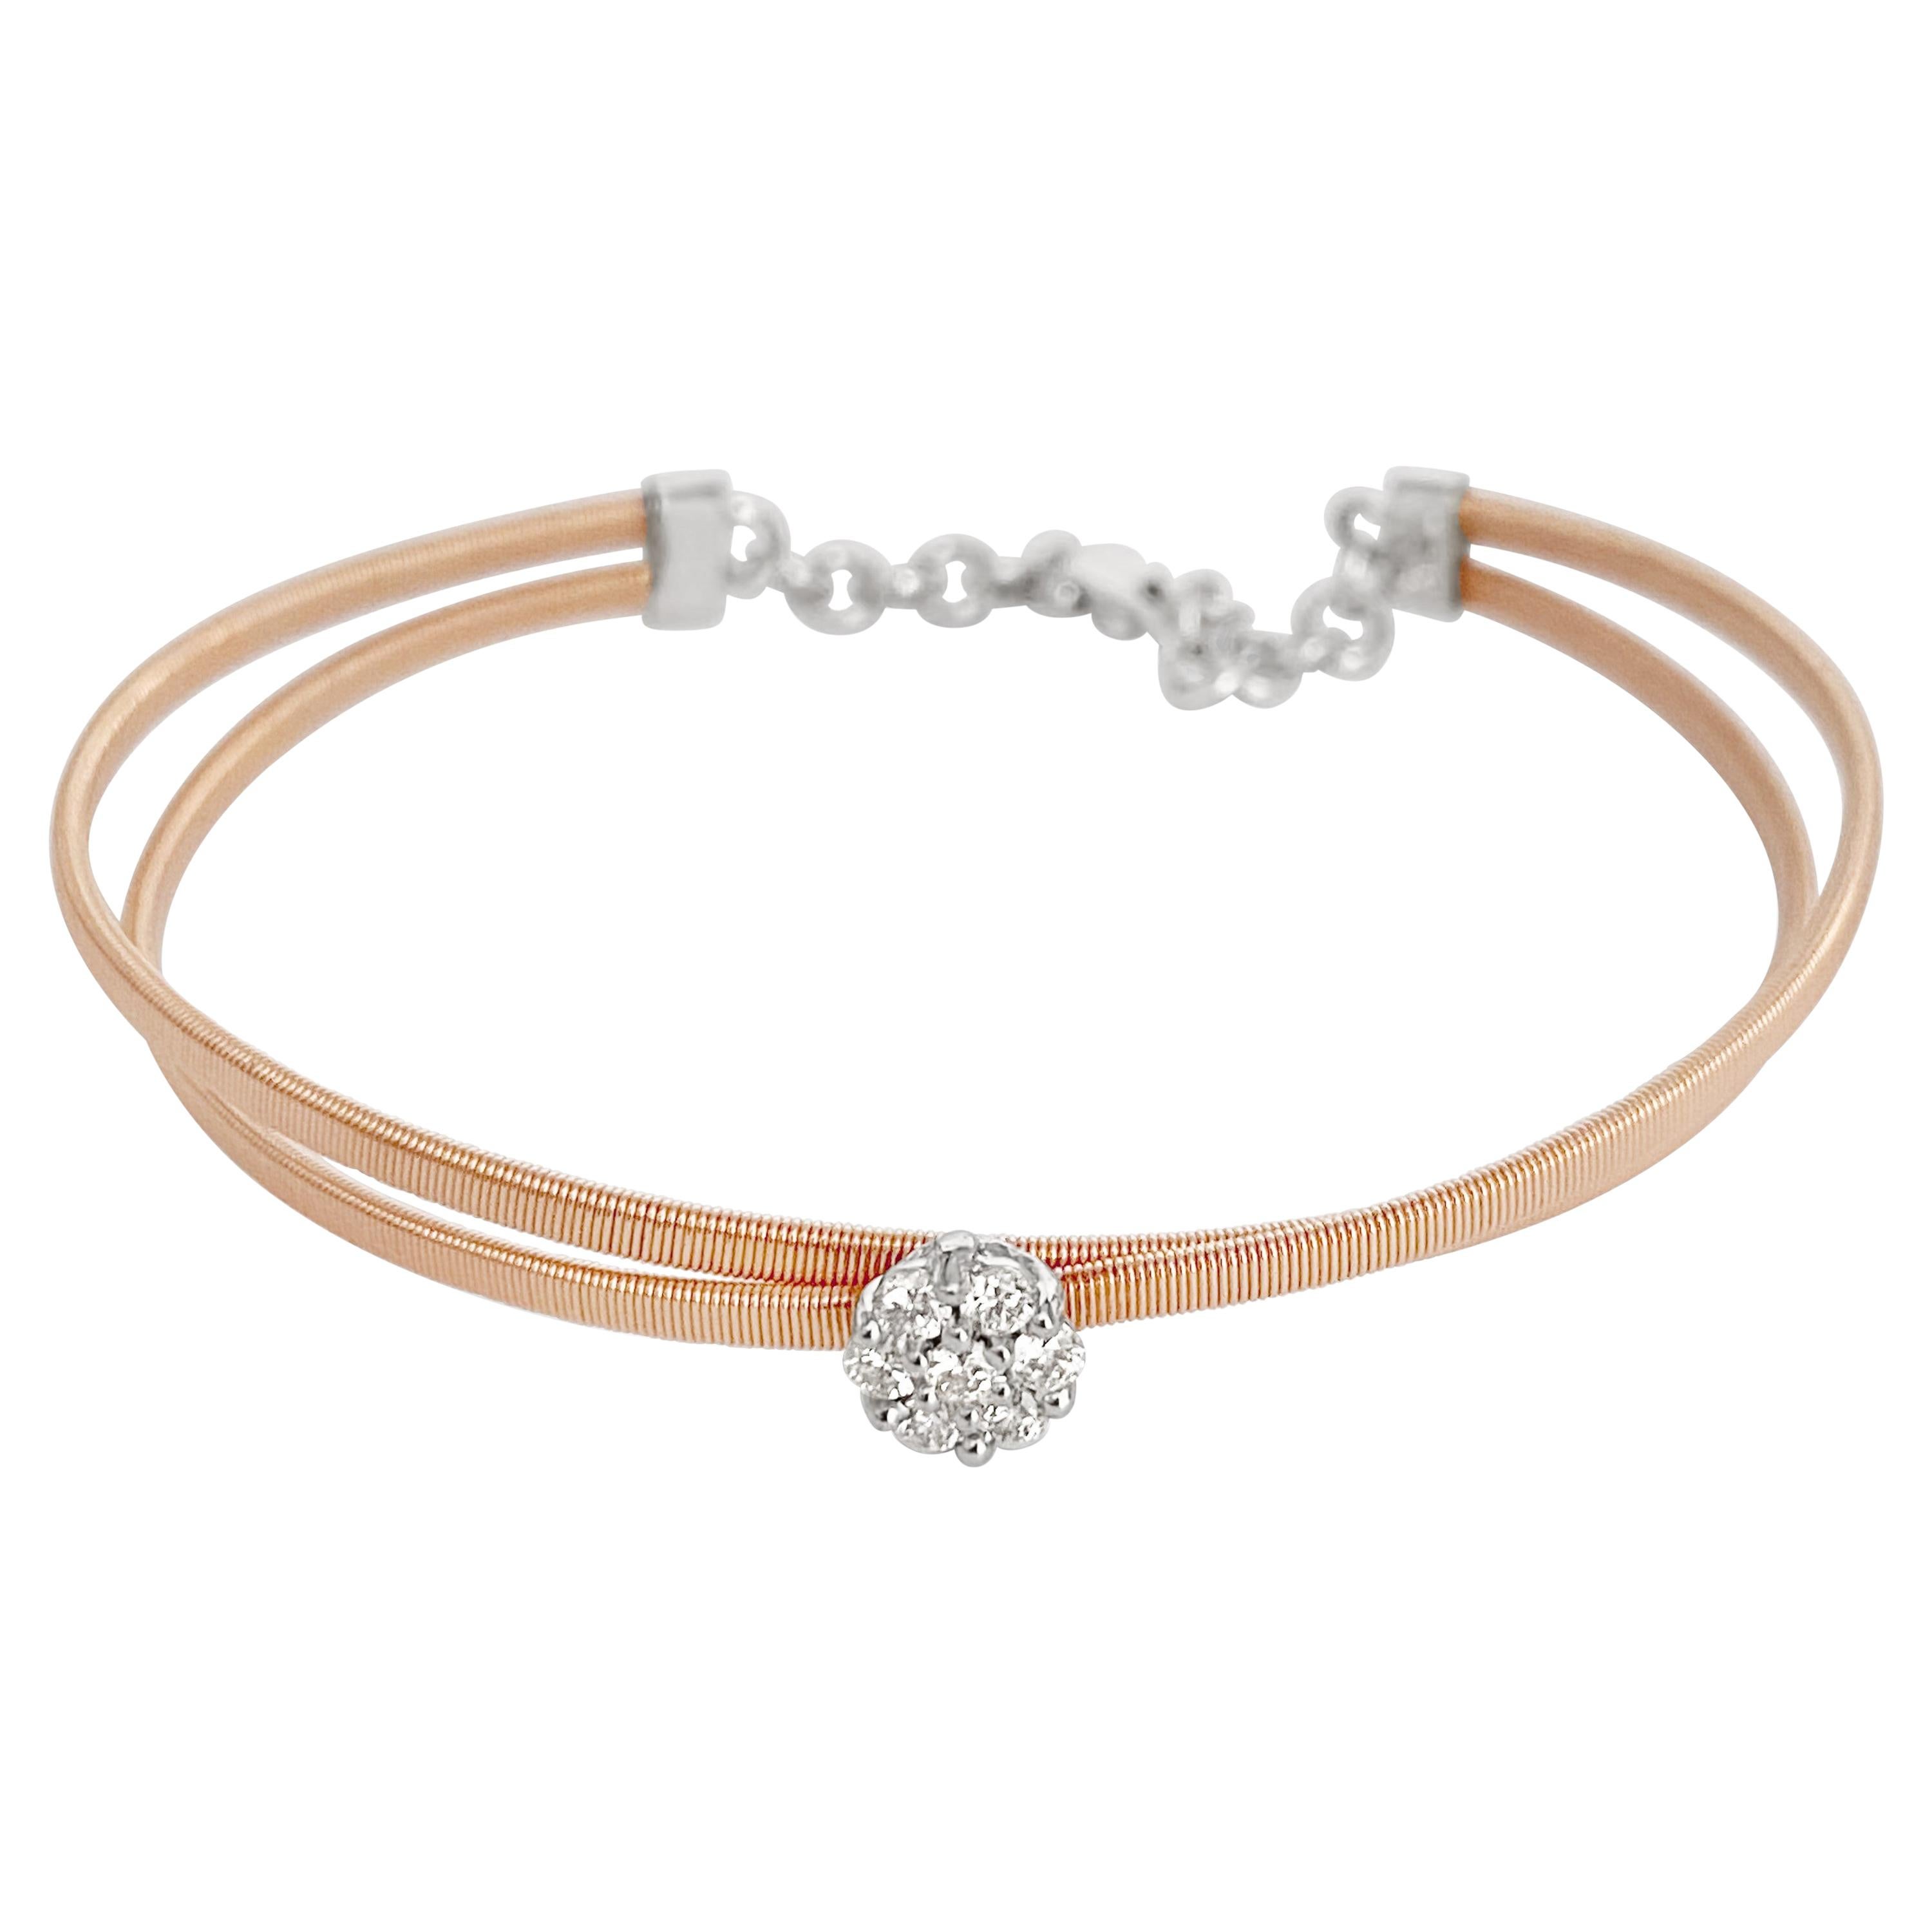 Flower Center of Round Brilliant Diamond and Rose Gold Cuff Bracelet, 14k Gold